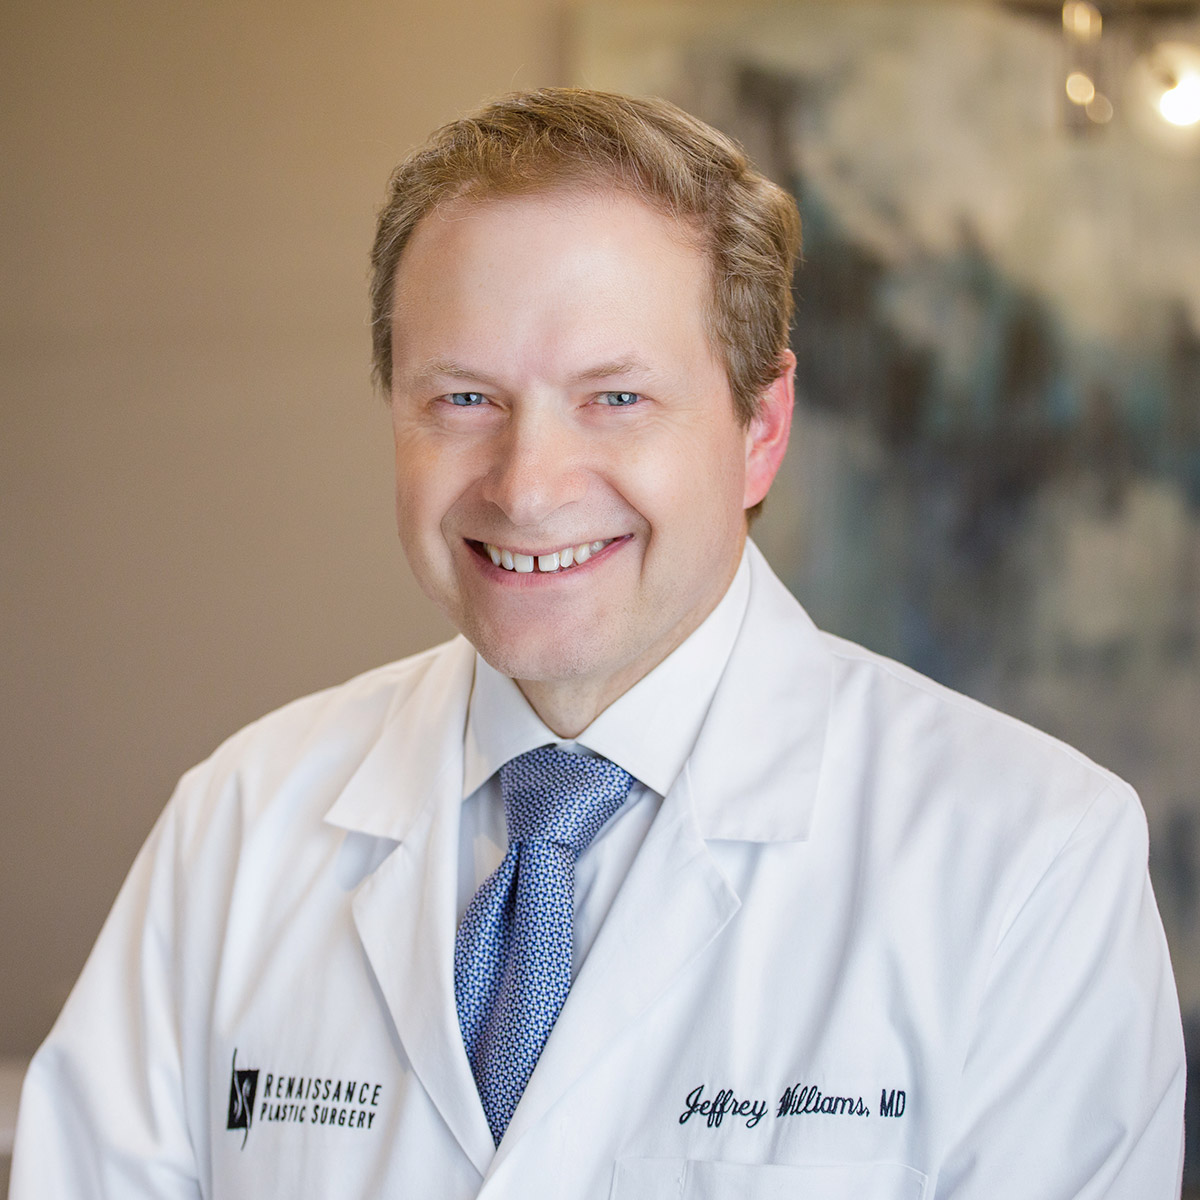 Dr. Jeffrey Williams, Board Certified Plastic Surgeon at Renaissance Plastic Surgery in Troy, MI.